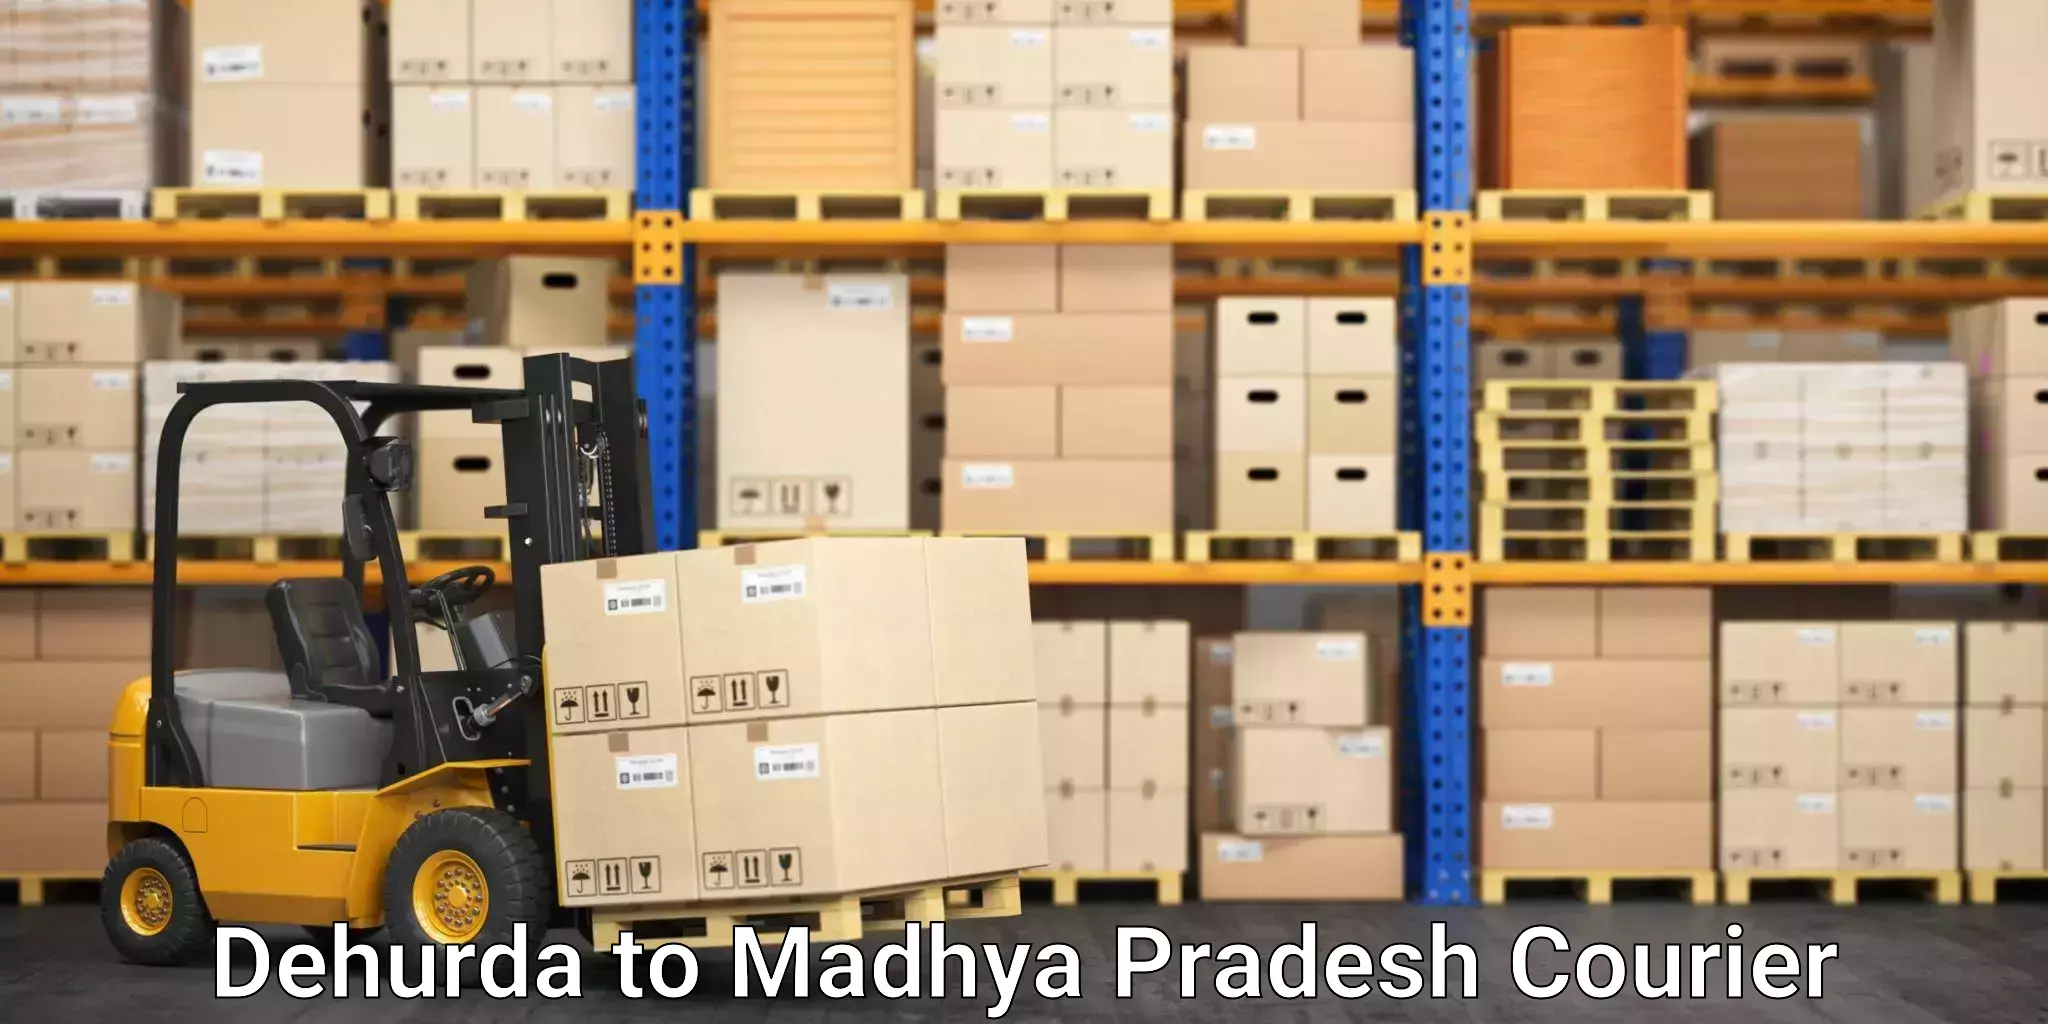 Courier service comparison in Dehurda to Mandideep